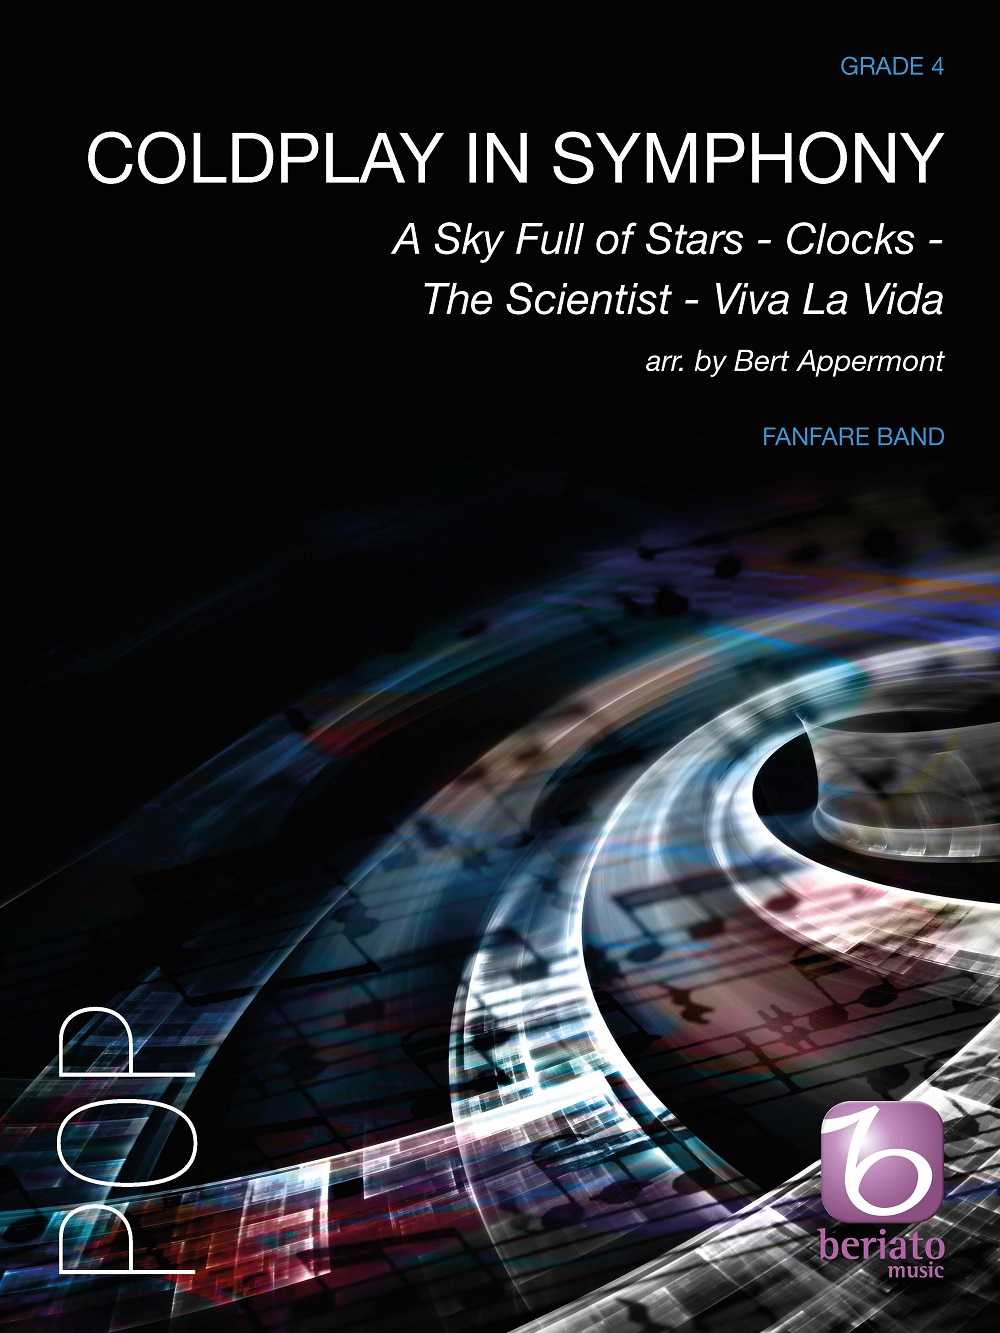 COLDPLAY IN SYMPHONY: A SKY FULL OF STARS - CLOCKS - THE SCIENTIST - VIVA LA VIDA